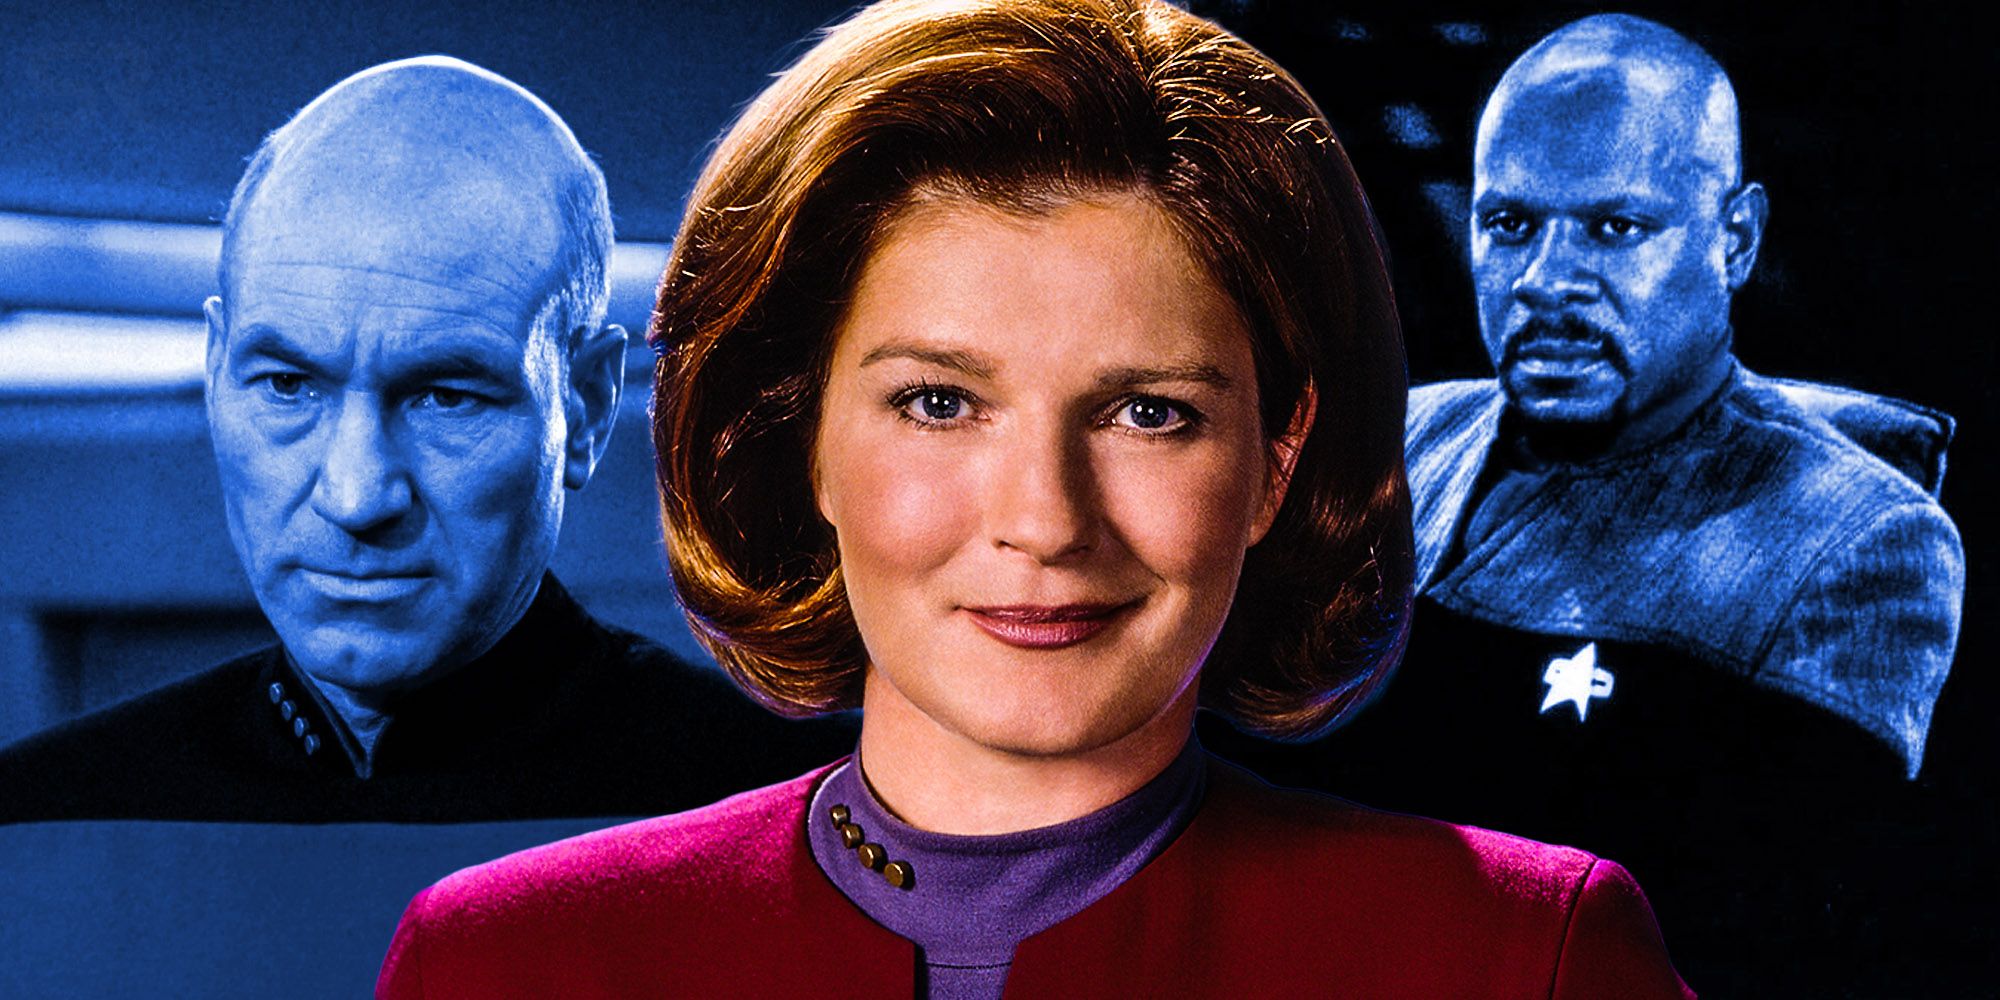 Captain Janeway Captain picard Captain sisko Star trek deep space nine next generation voyager